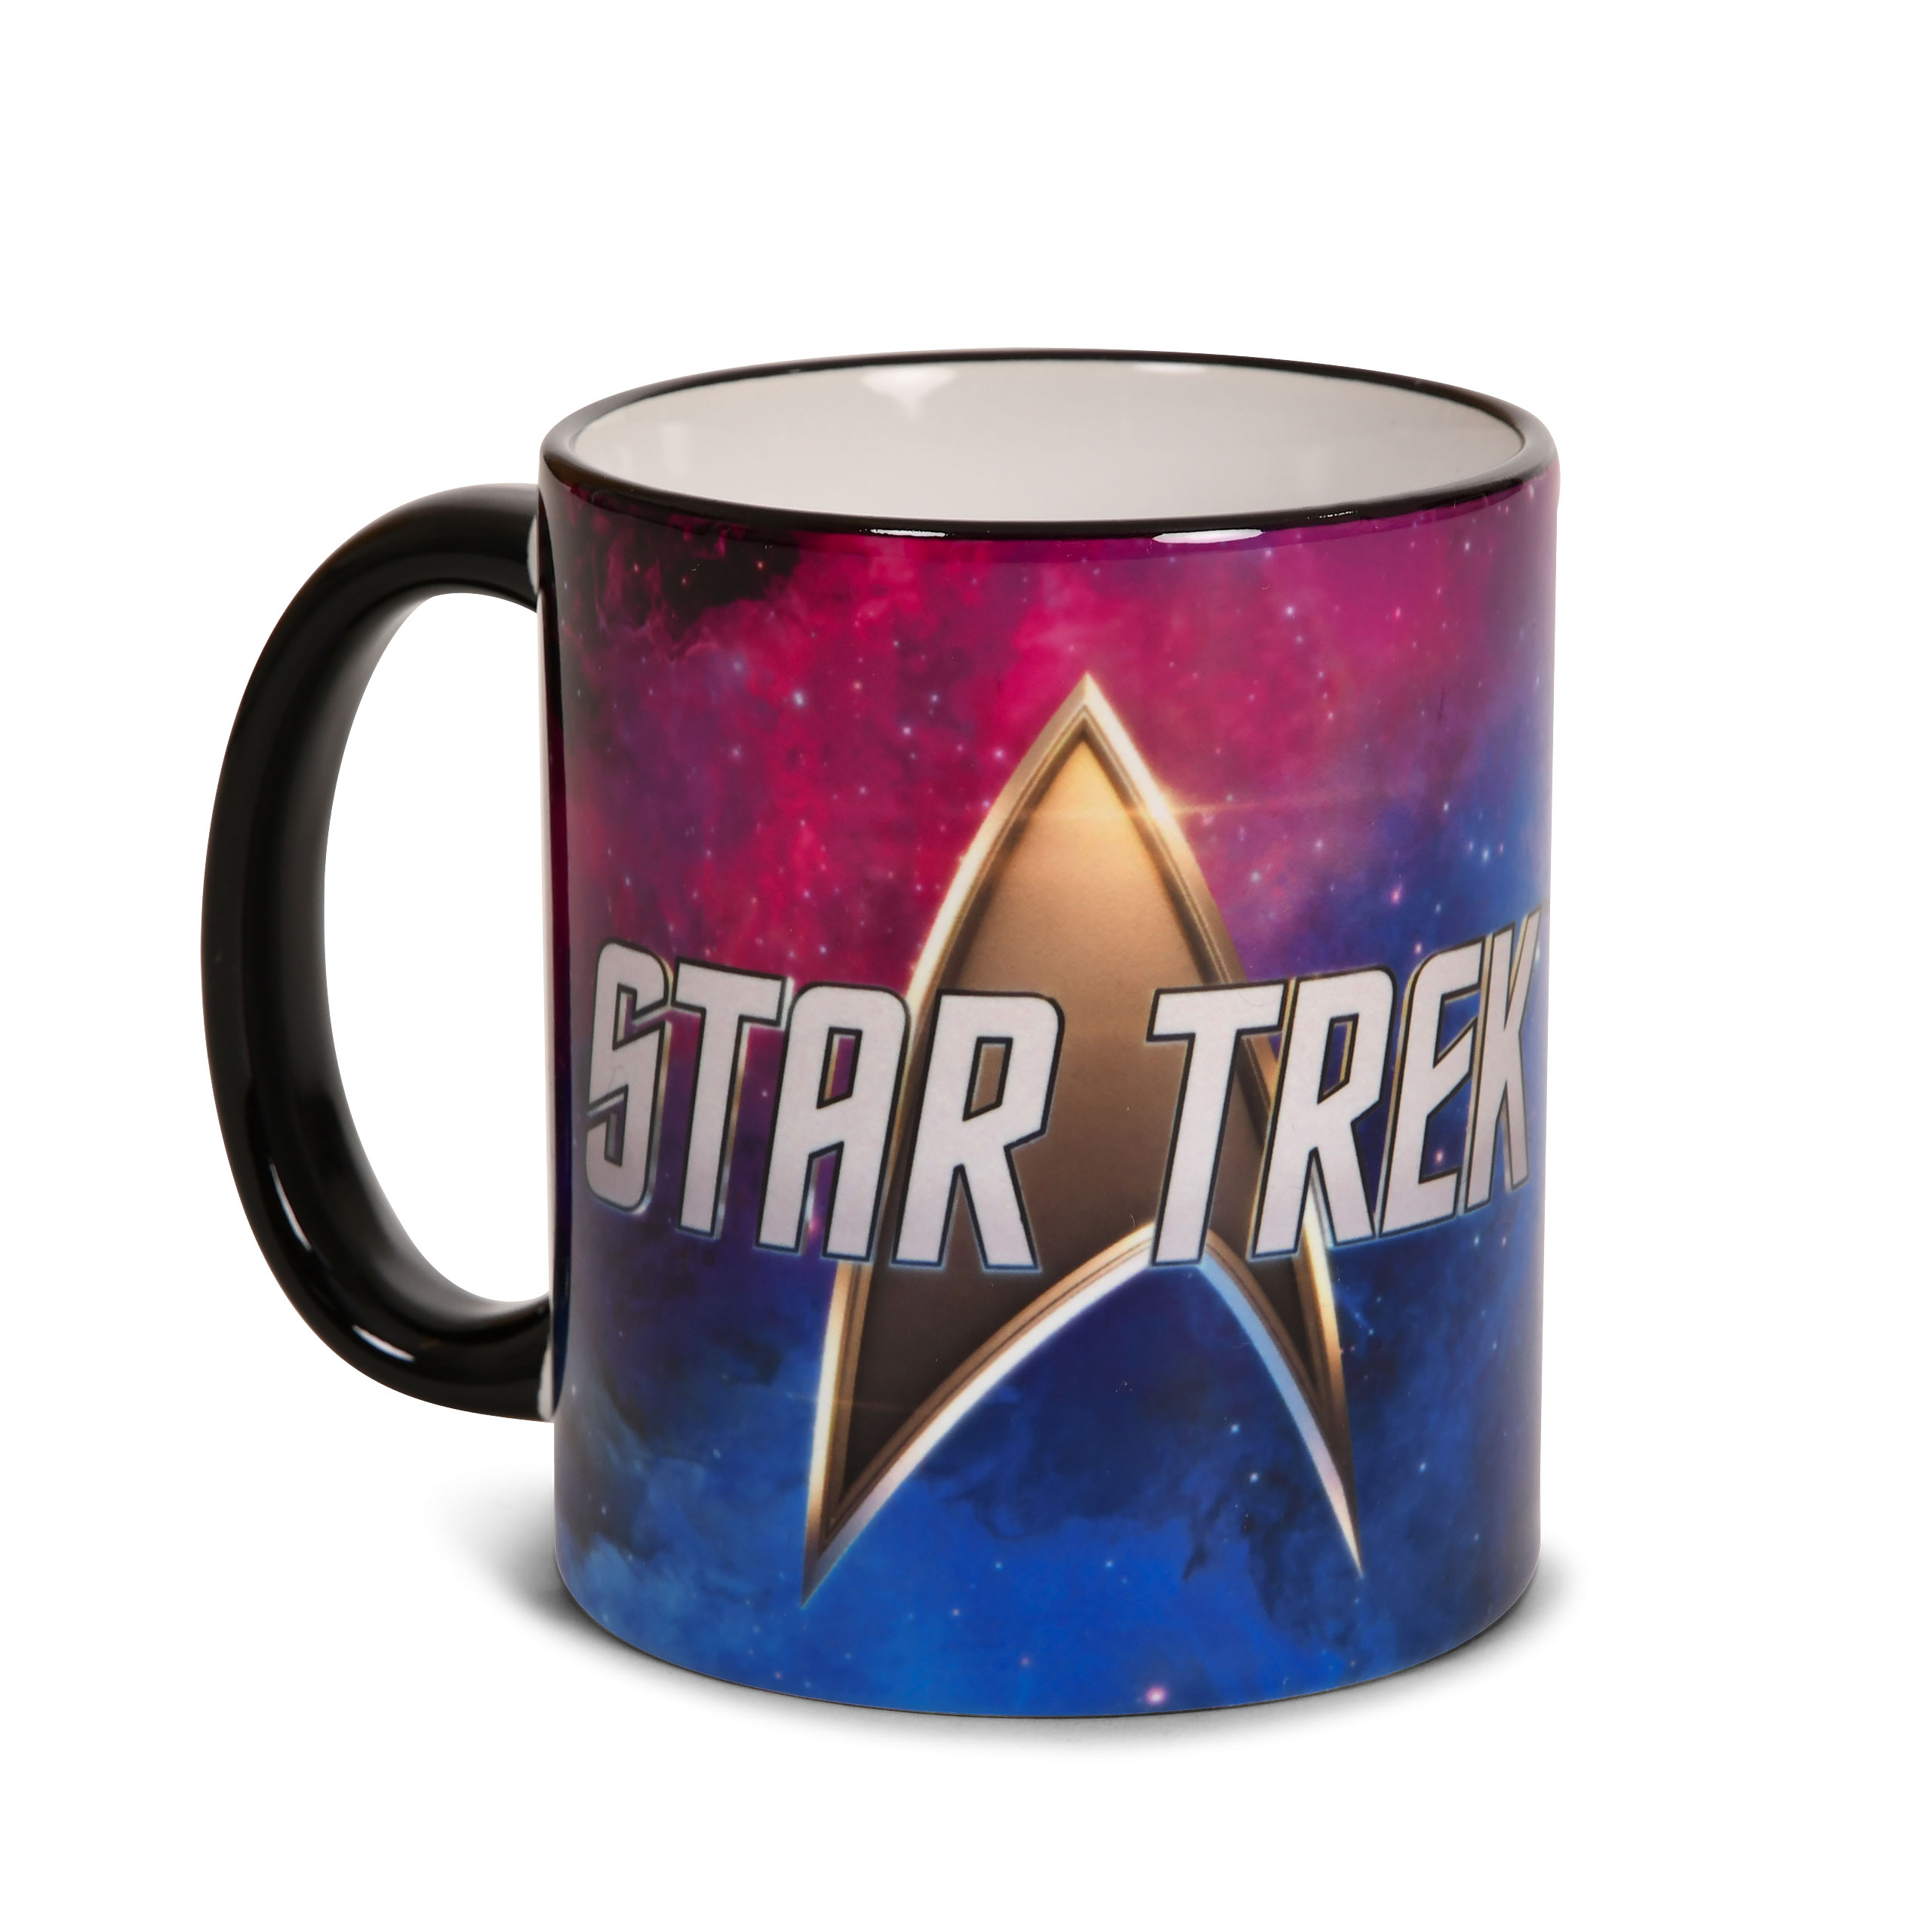 Star Trek - Deanna Troi Cup